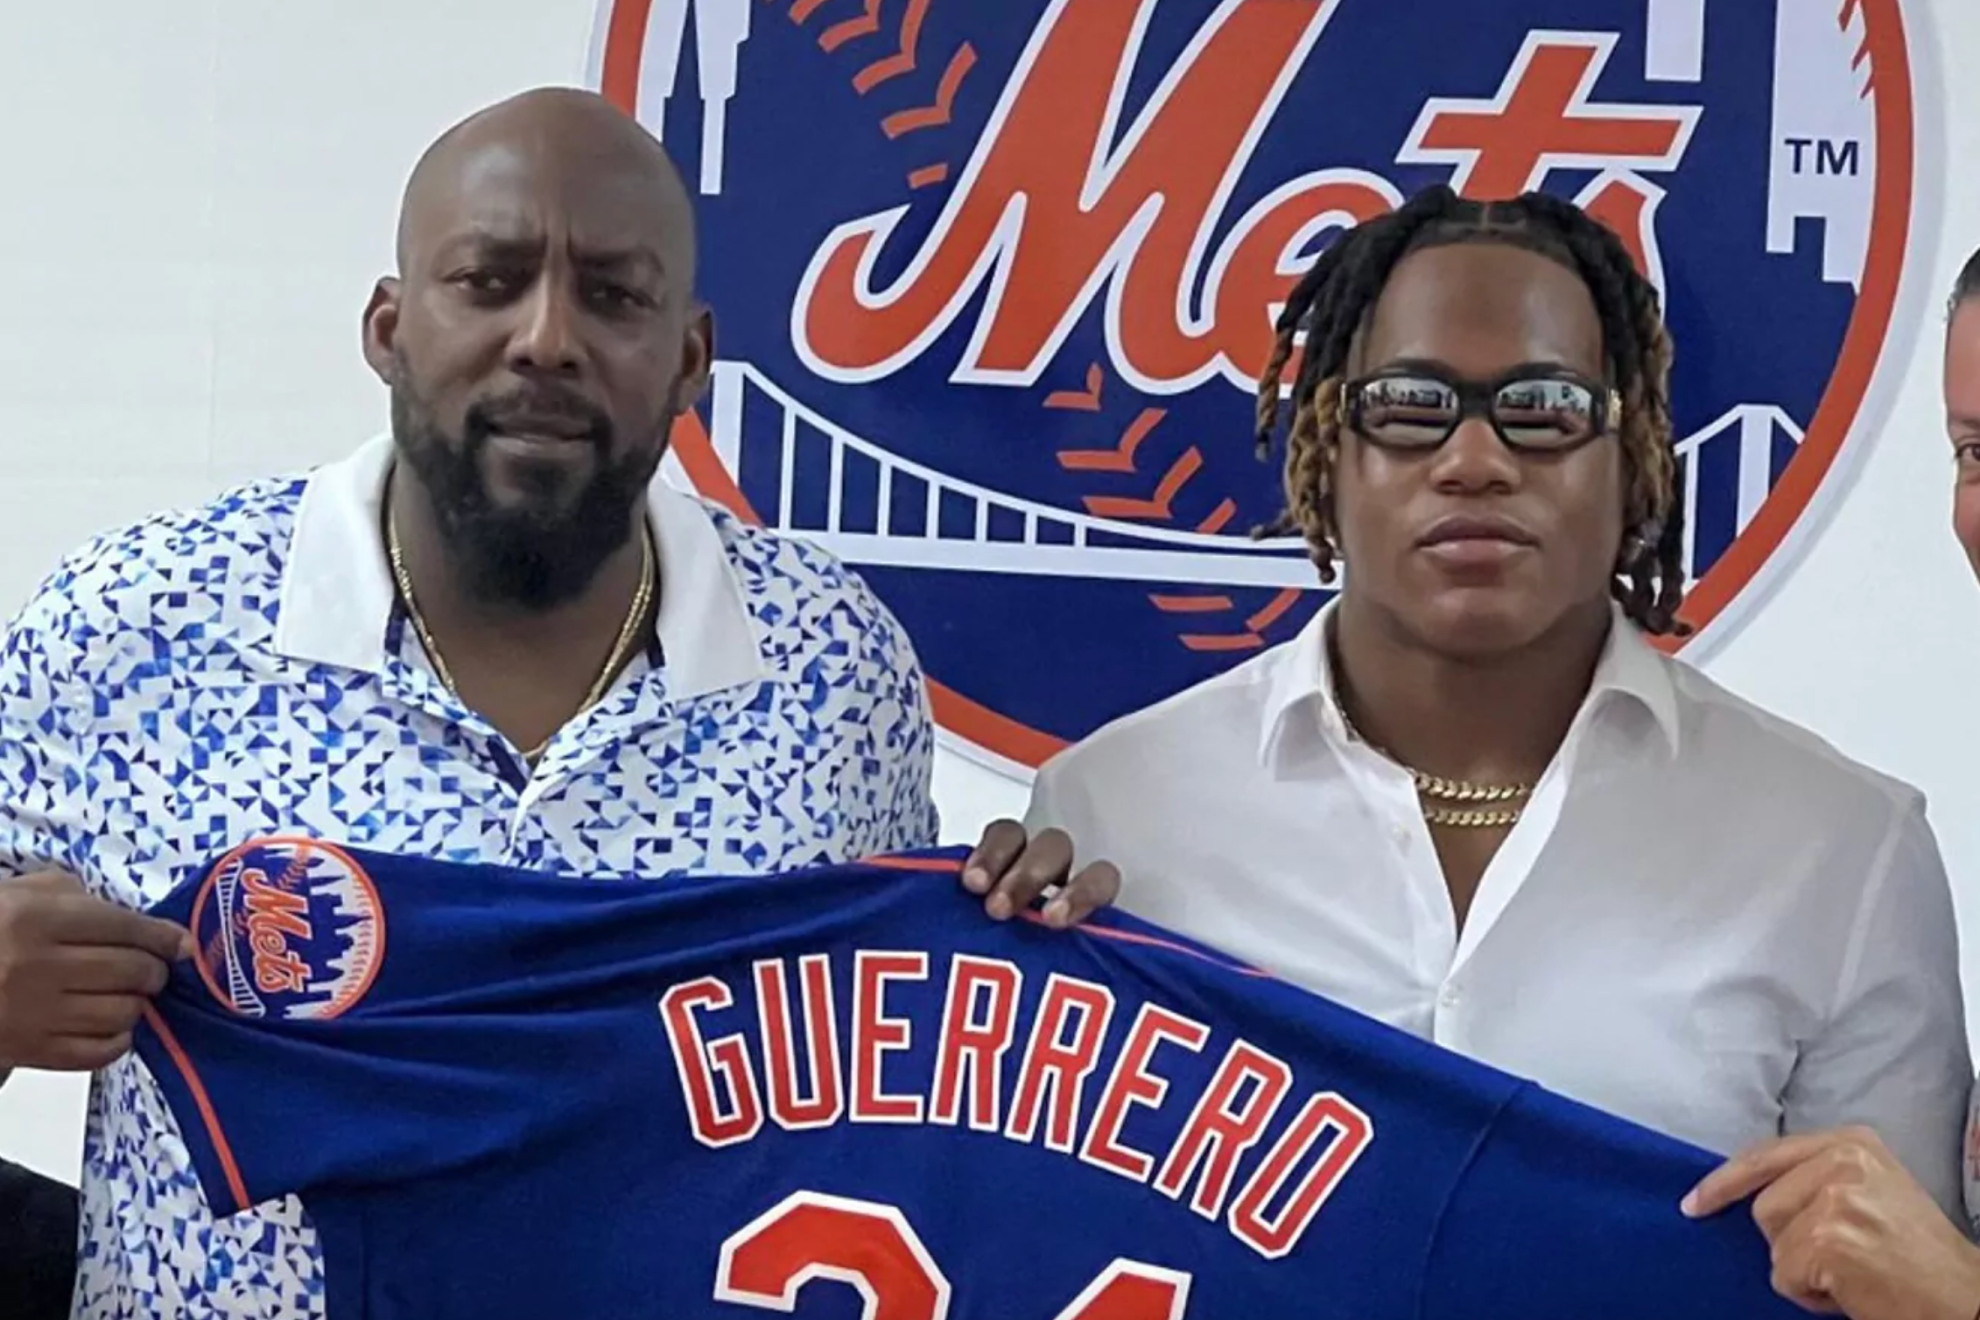 Mets sign Vladi Miguel Guerrero, son of Hall of Famer Vladimir Guerrero and brother of Vladdy Jr.